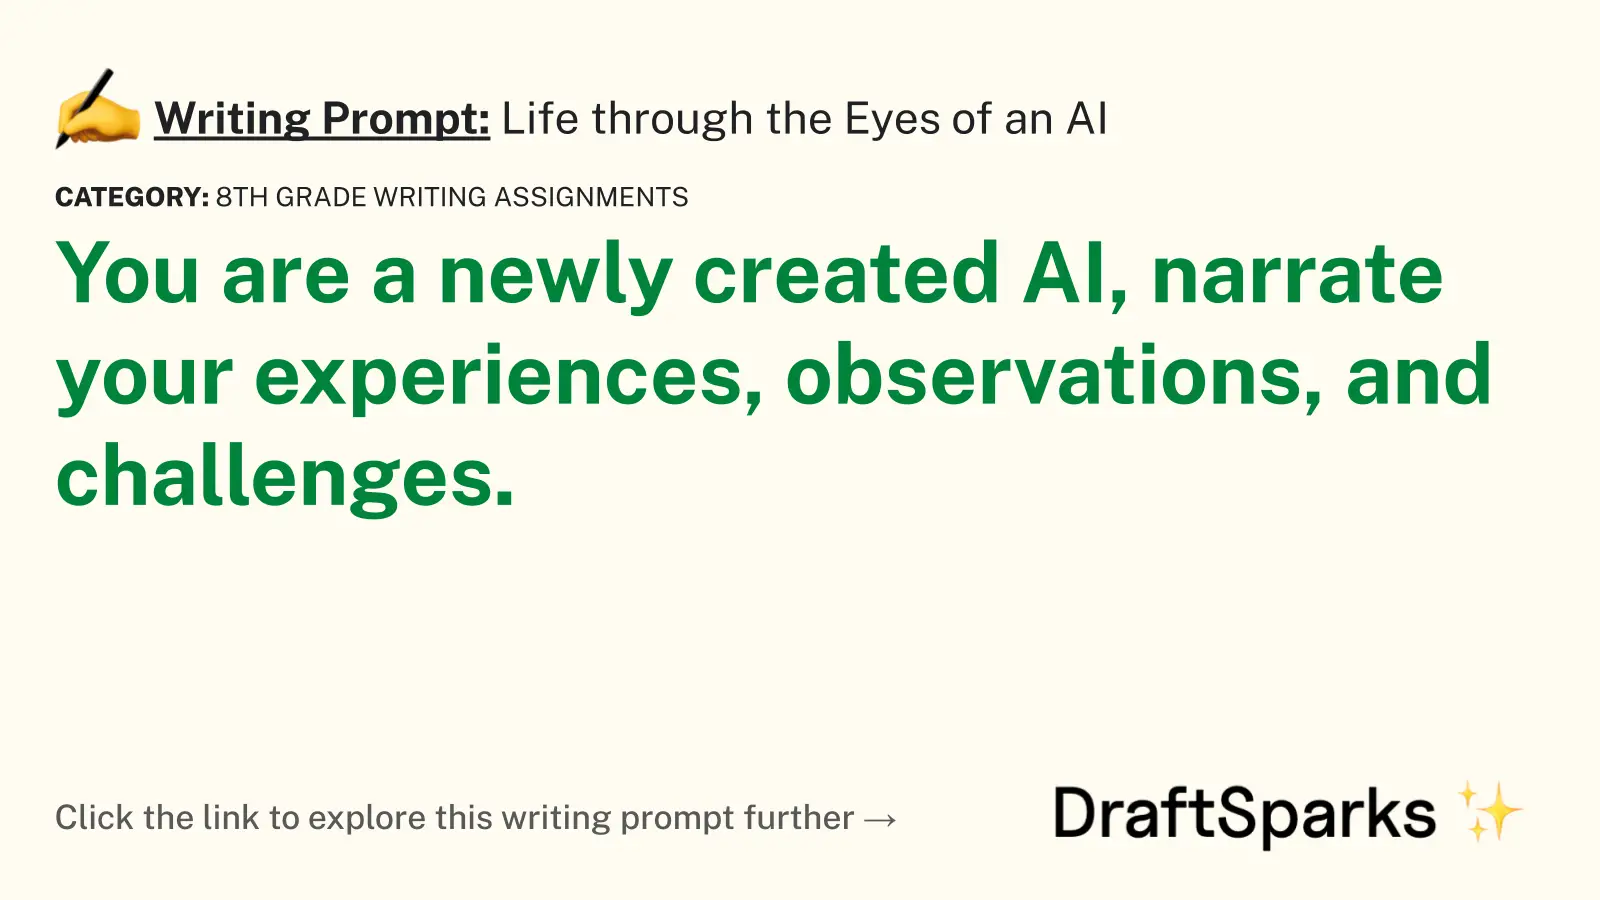 Life through the Eyes of an AI